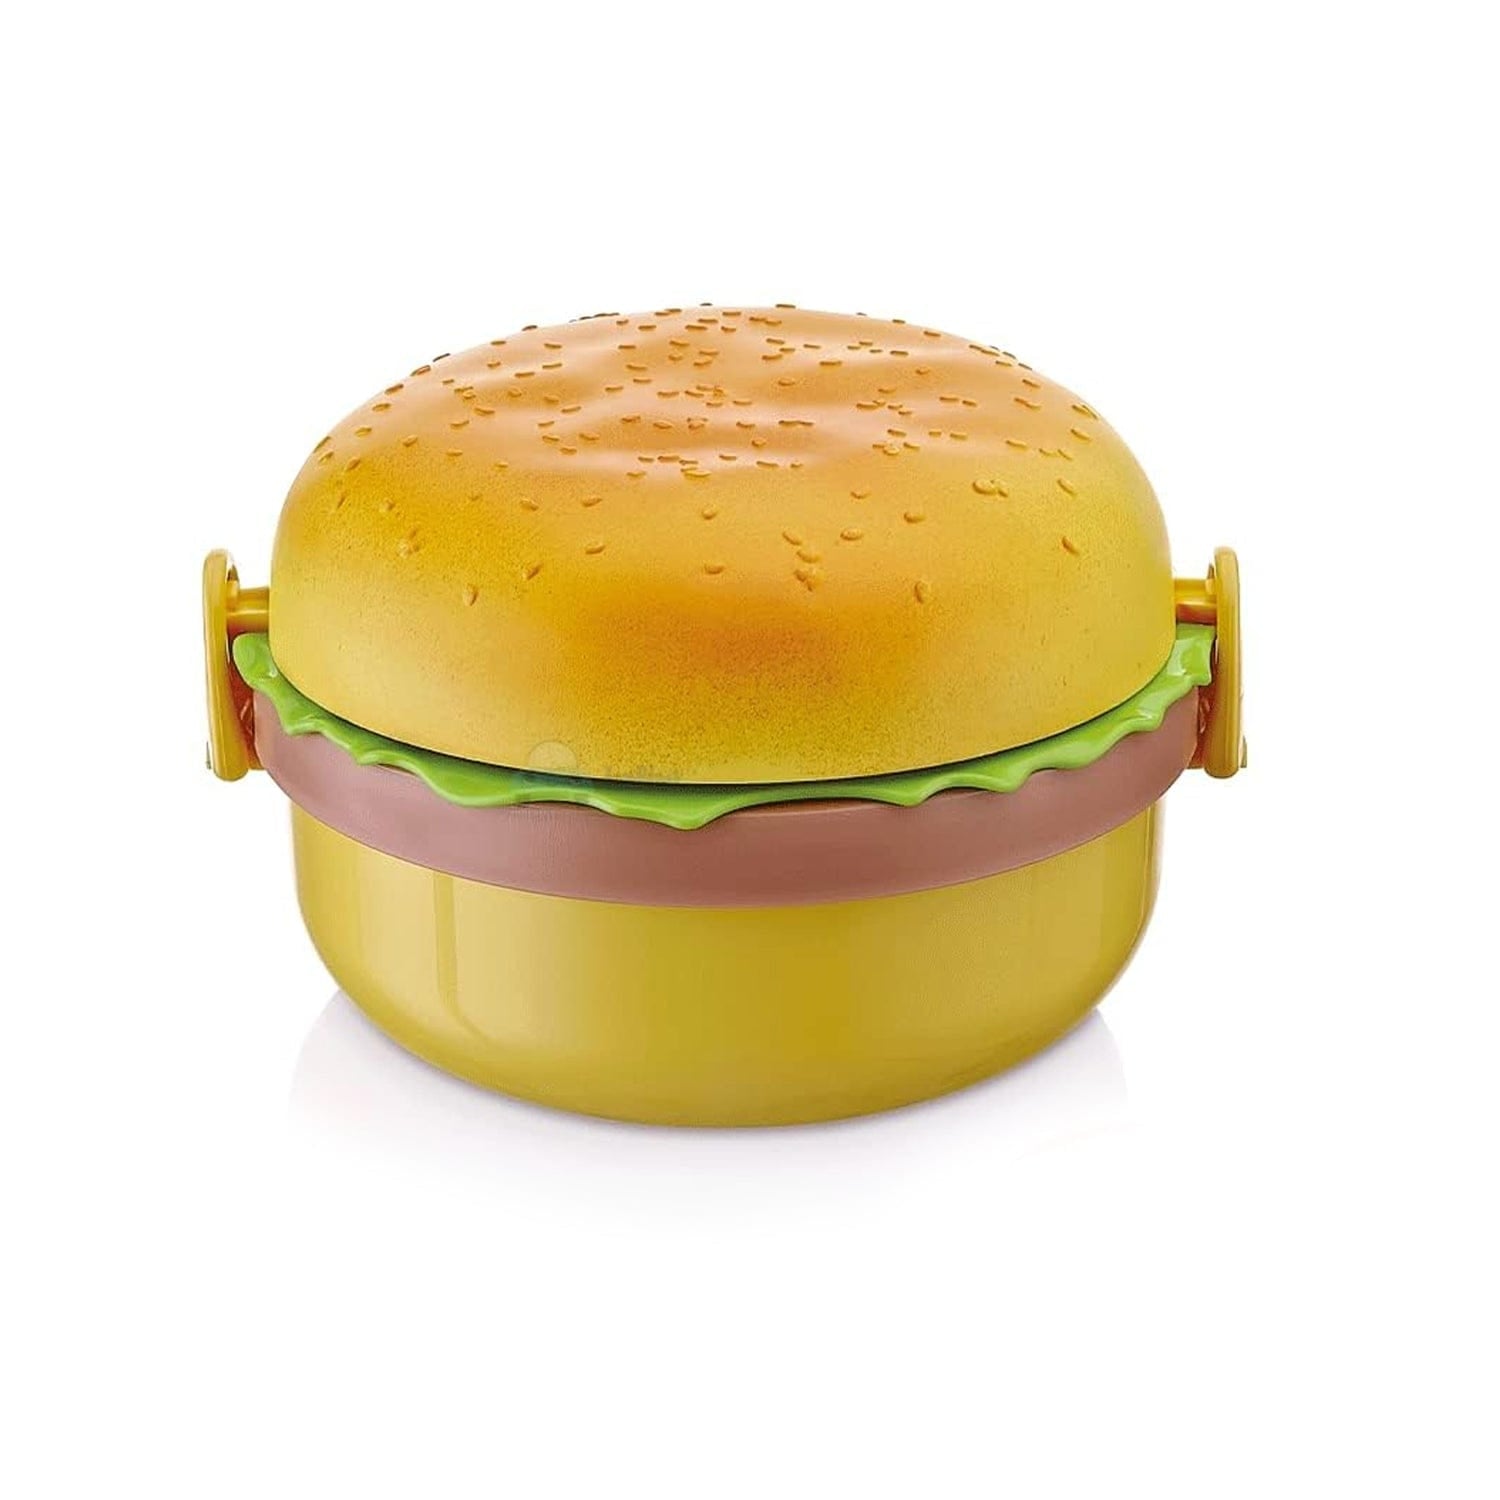 Burger lunch box